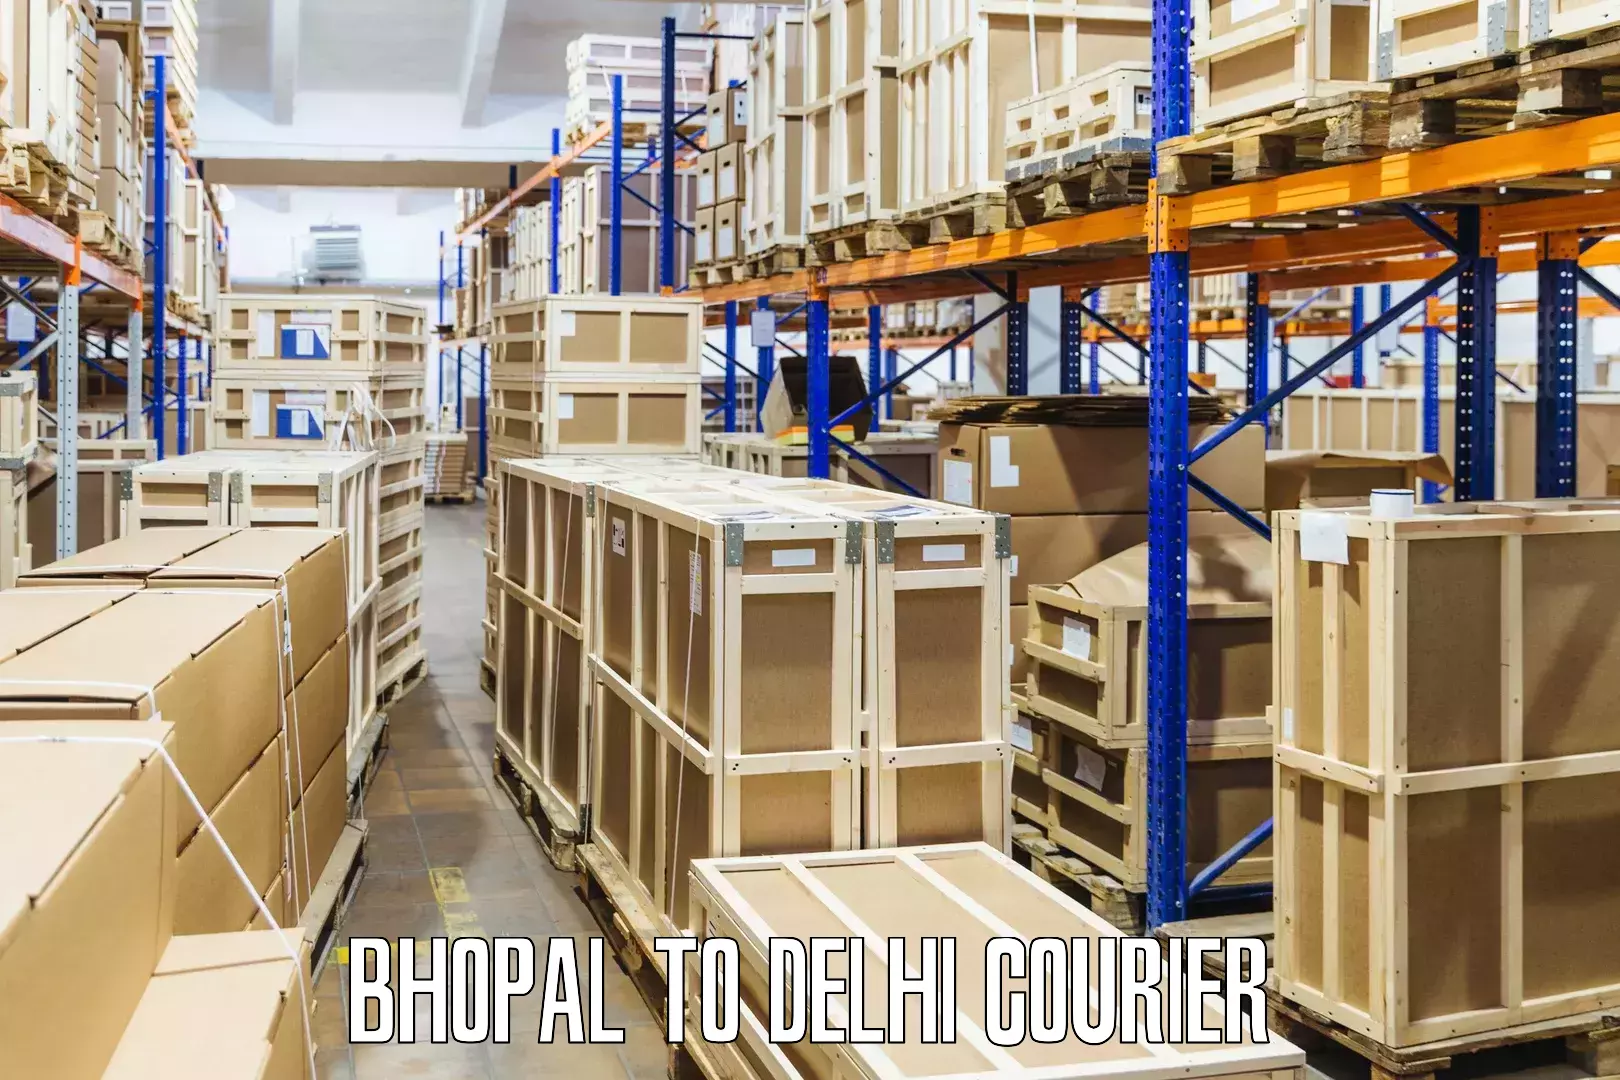 Advanced parcel tracking Bhopal to Burari